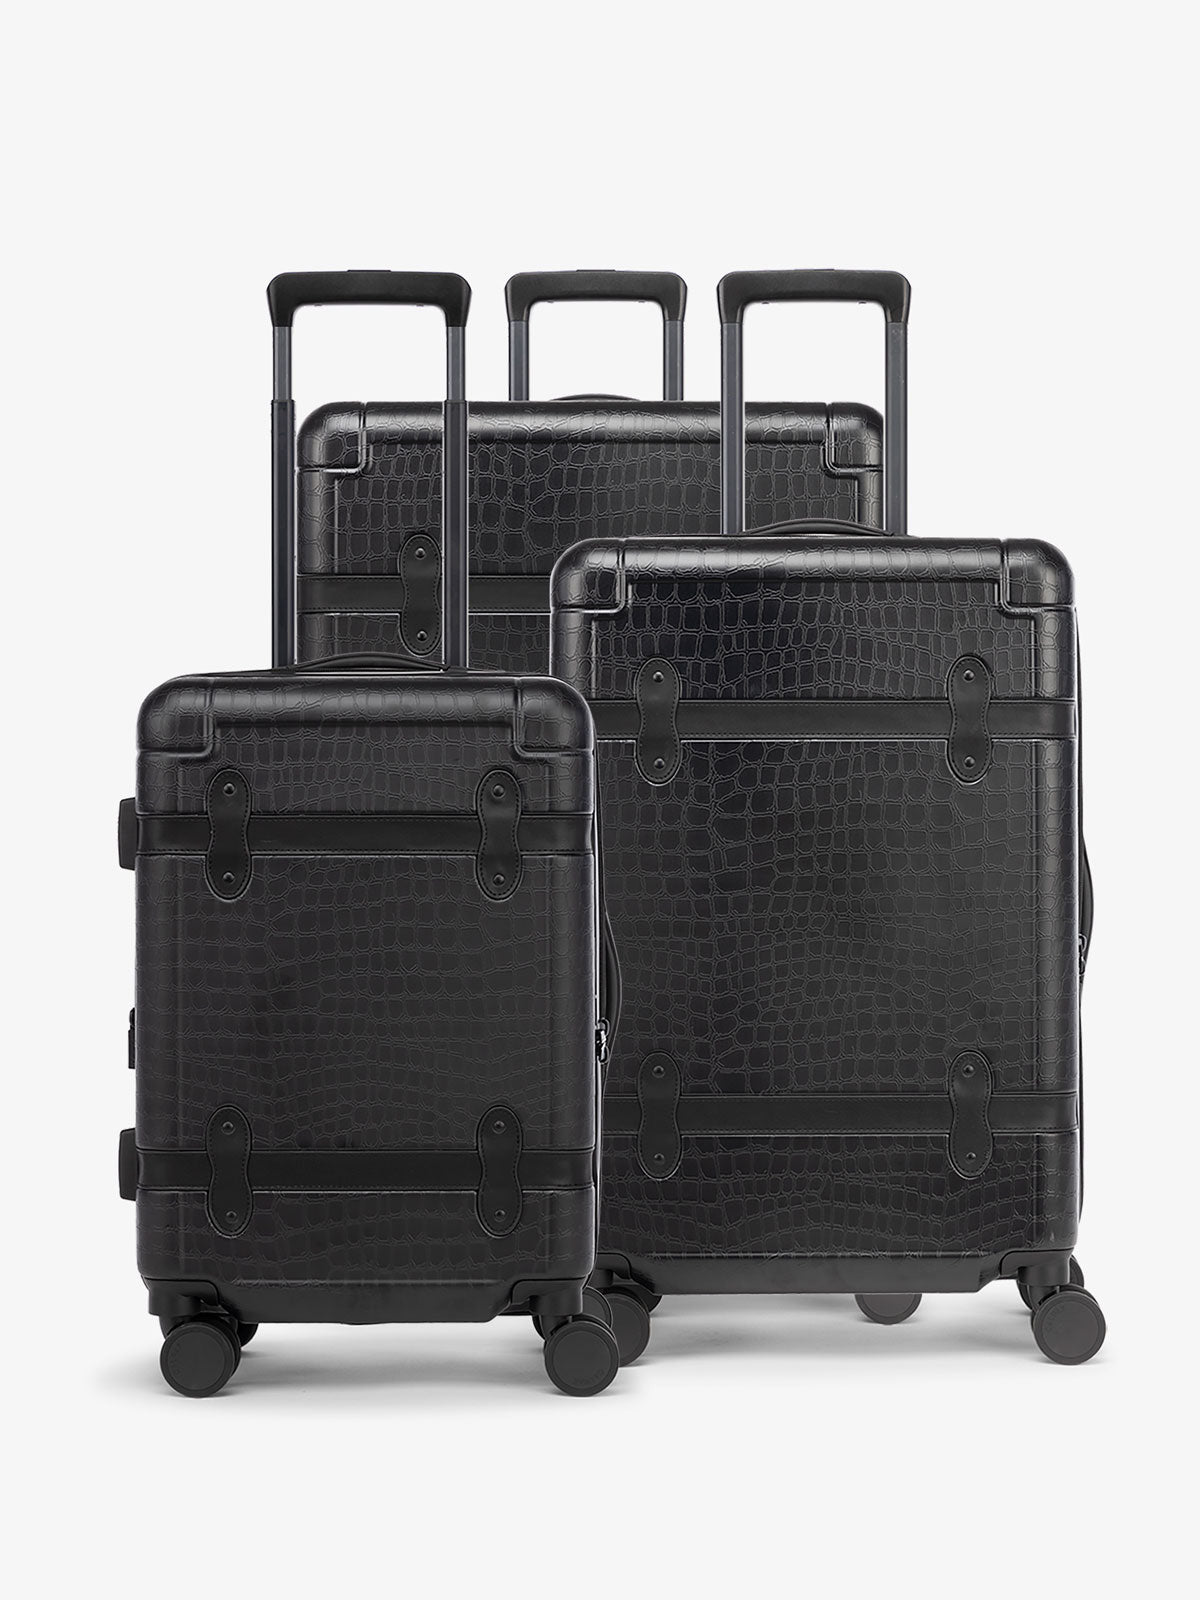 Ambeur 3-Piece Luggage Set, CALPAK